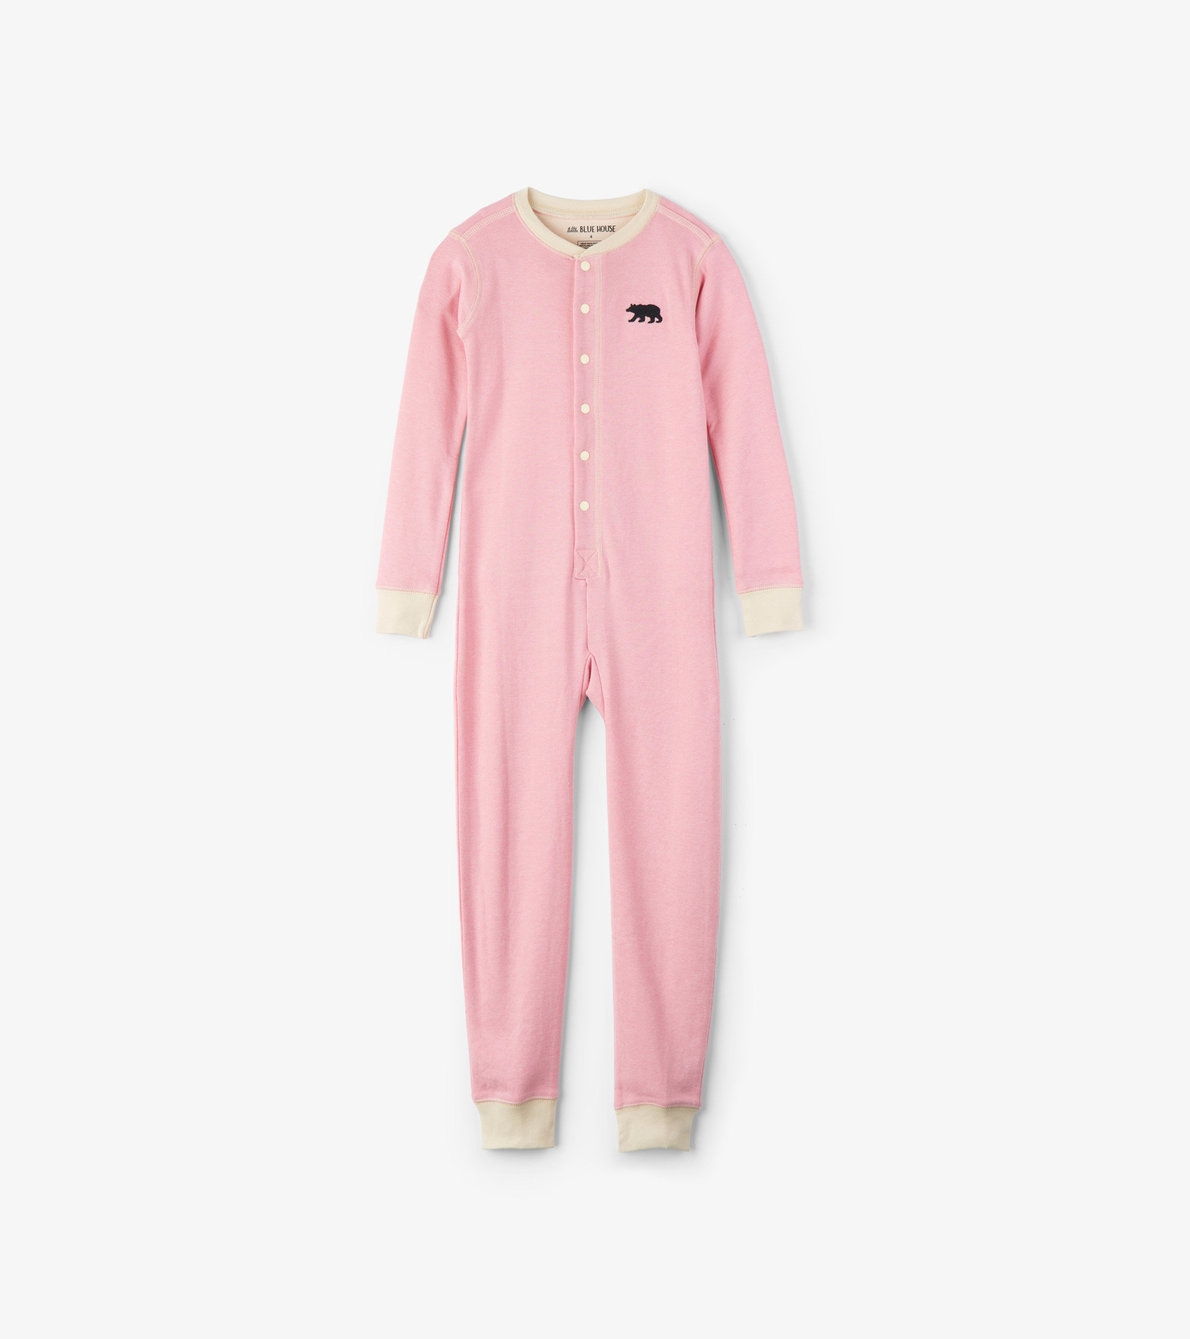 View larger image of Pink Bear Bum Kids Union Suit